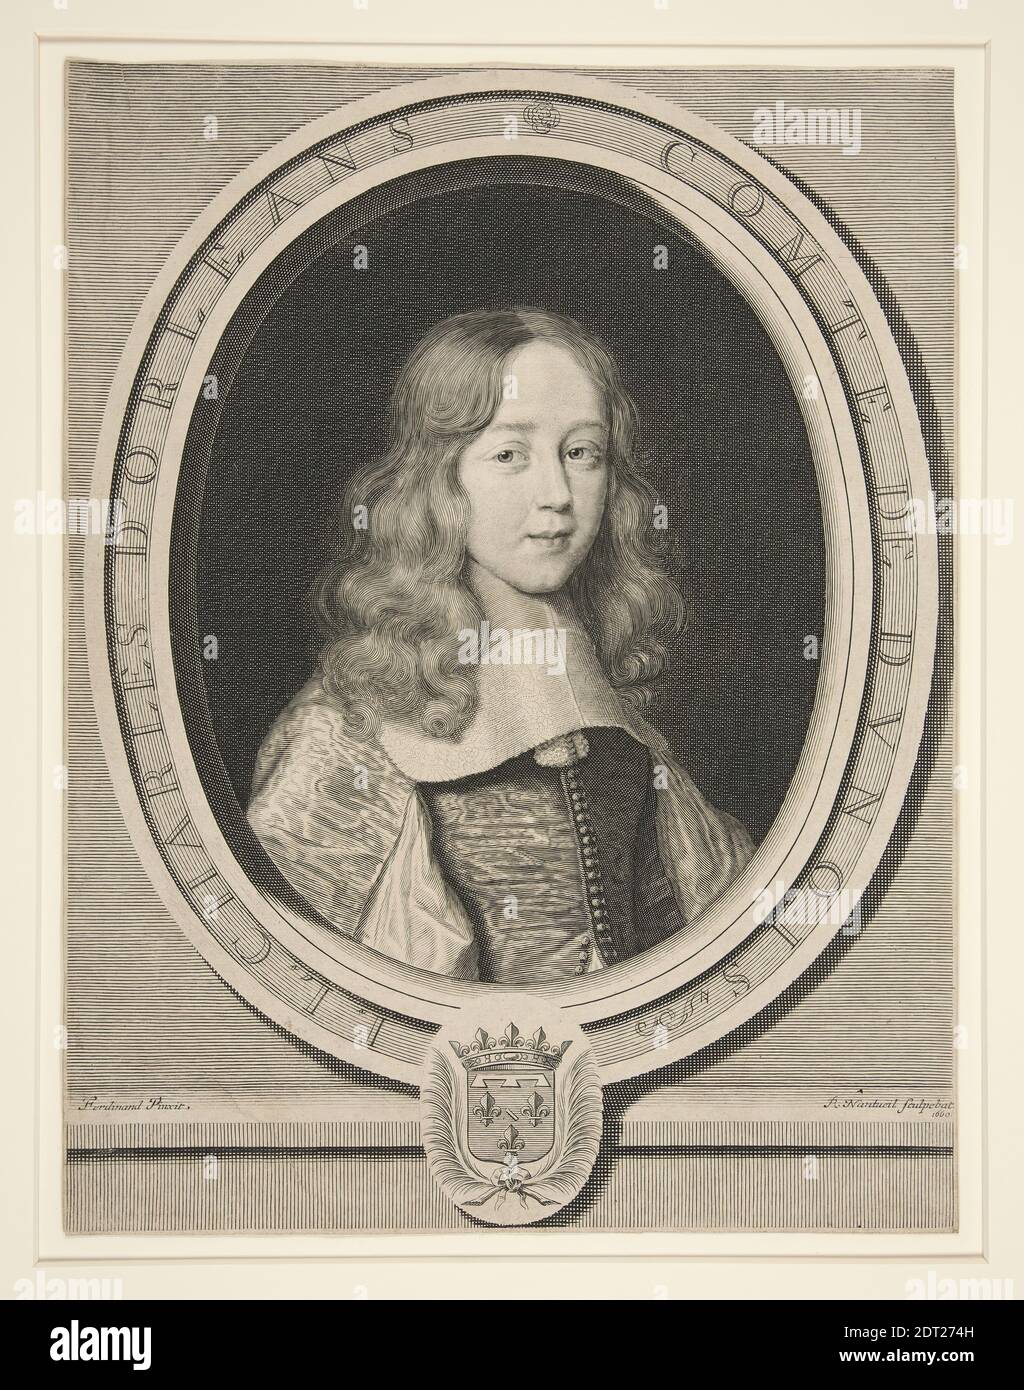 Ferdinand (active 17th century) - Louis XIII